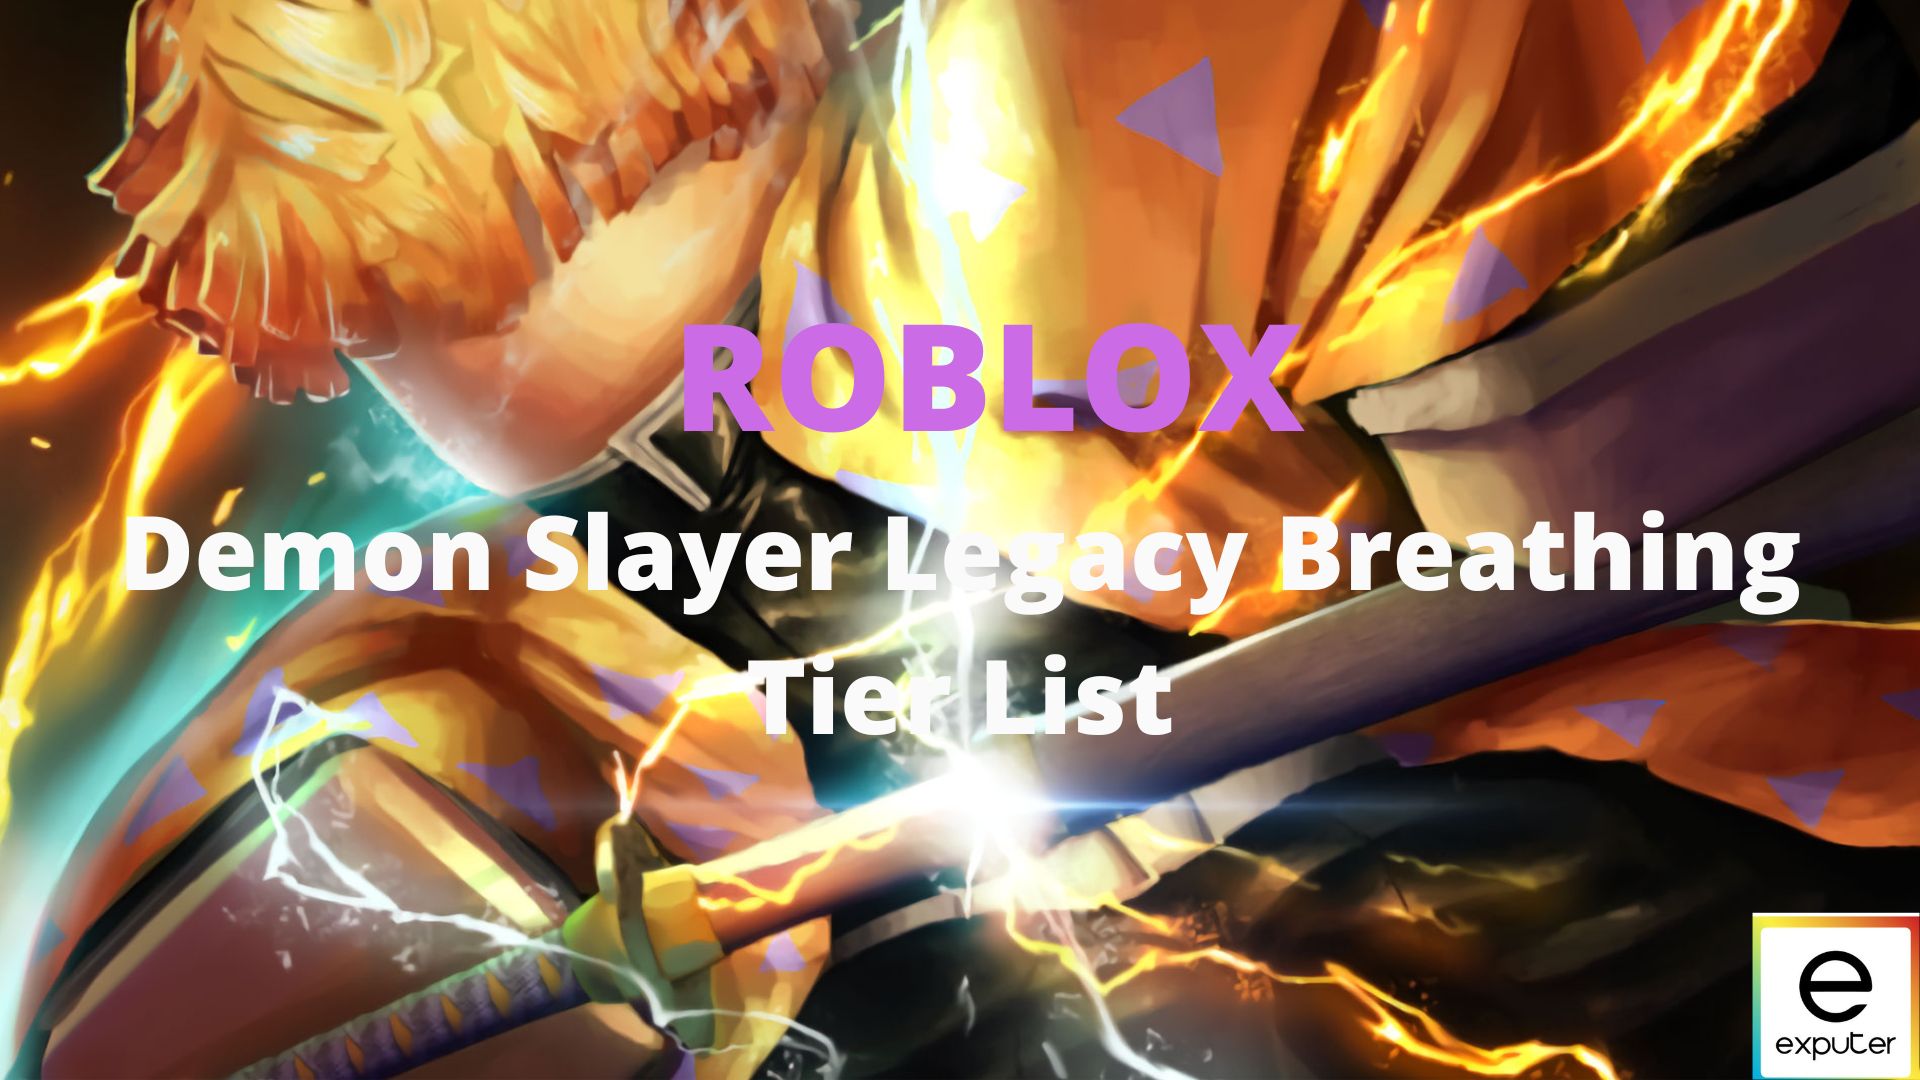 Demon Slayer: Legacy - Roblox